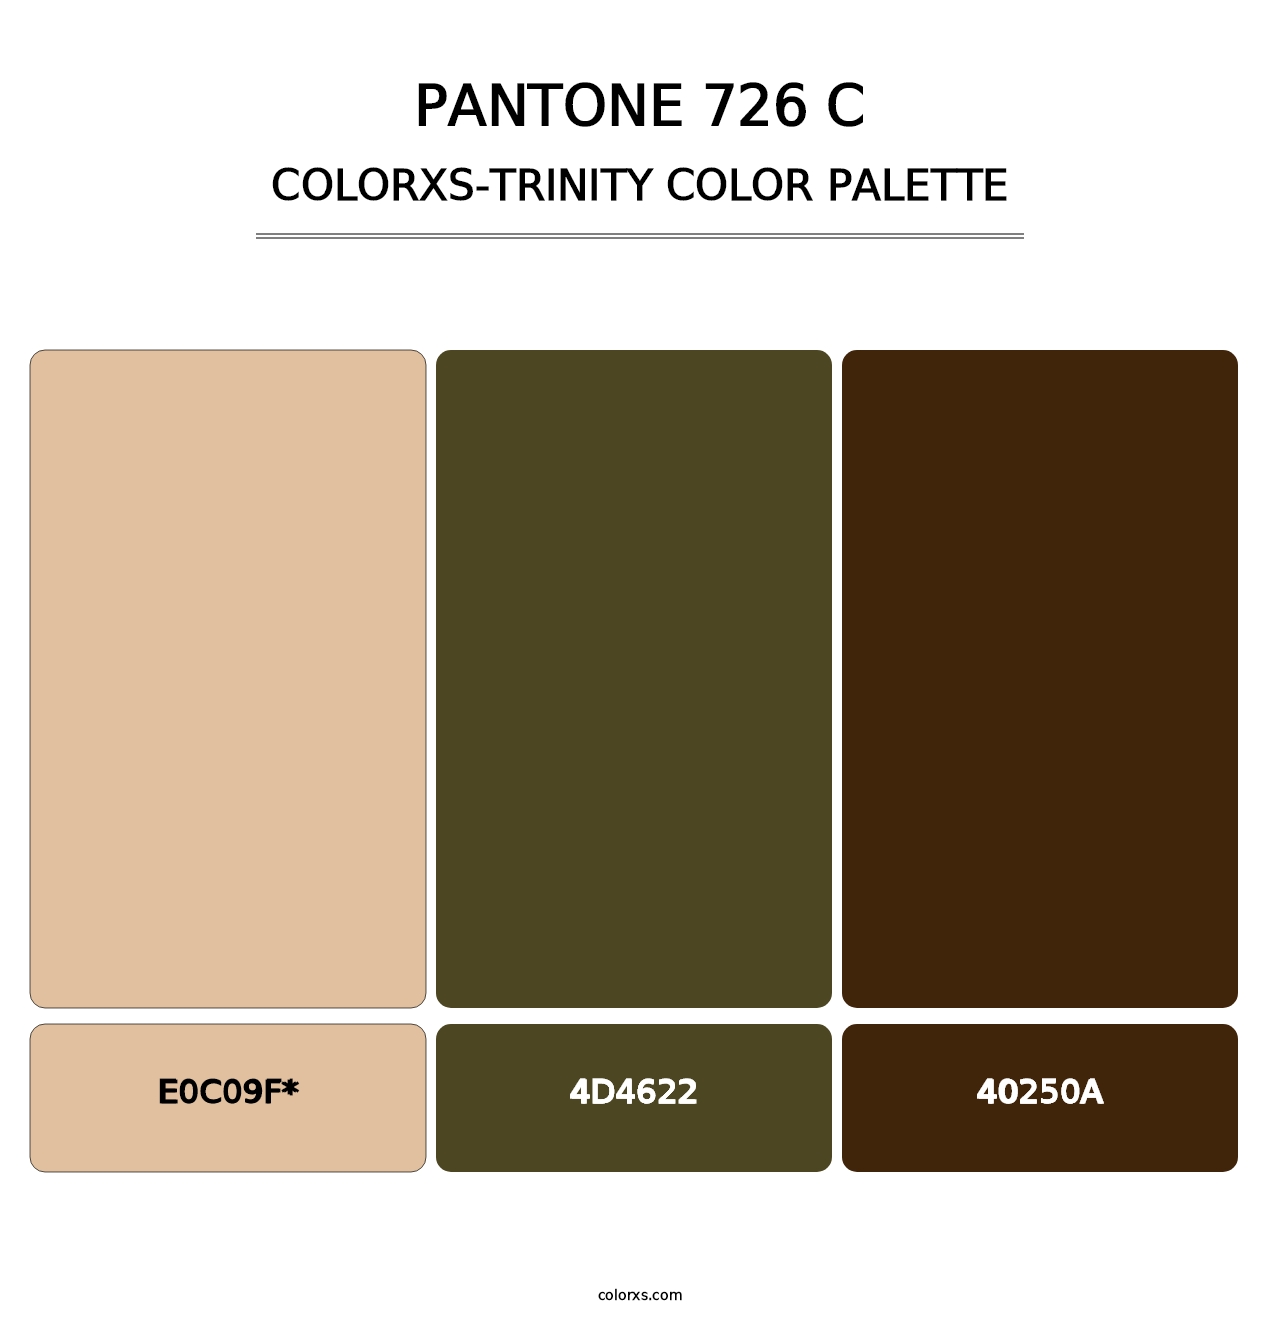 PANTONE 726 C - Colorxs Trinity Palette